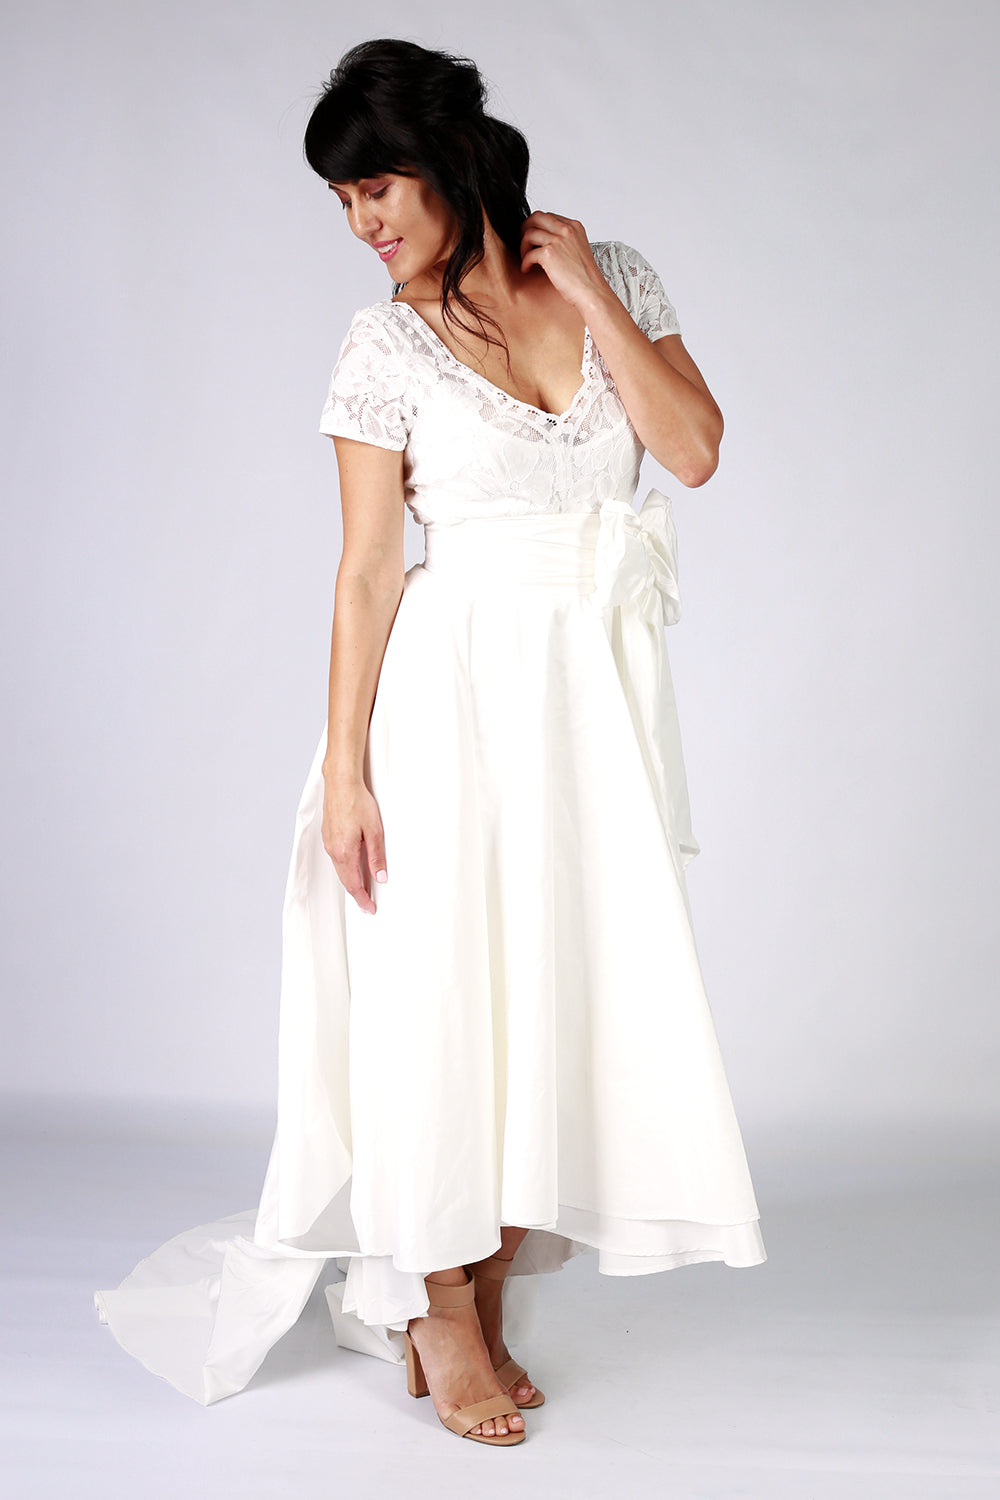 Miriam Wedding Skirt | Wrap Around Dresses Skirts | New Zealand Fashion | Annah Stretton / Designer NZ / Bridal Skirt | Bridesmaid NZ / Bridal Party NZ 